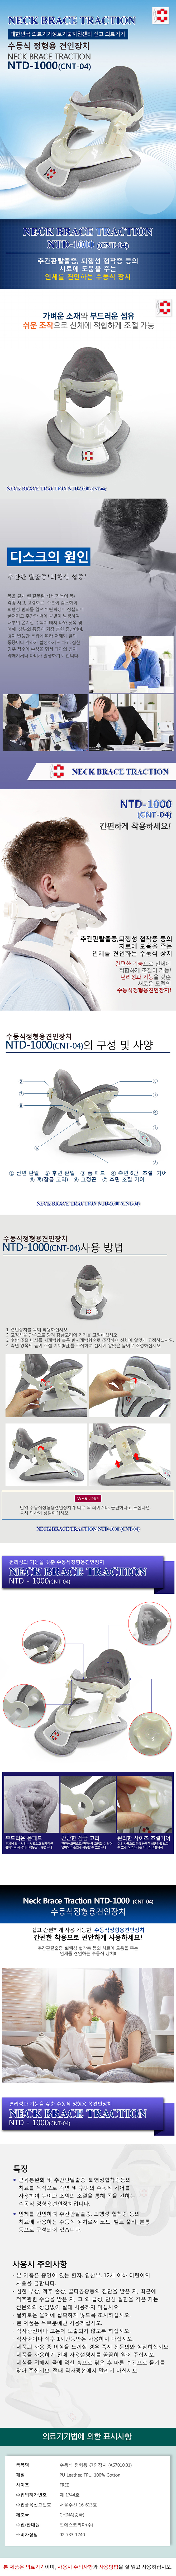 NTD-1000.jpg